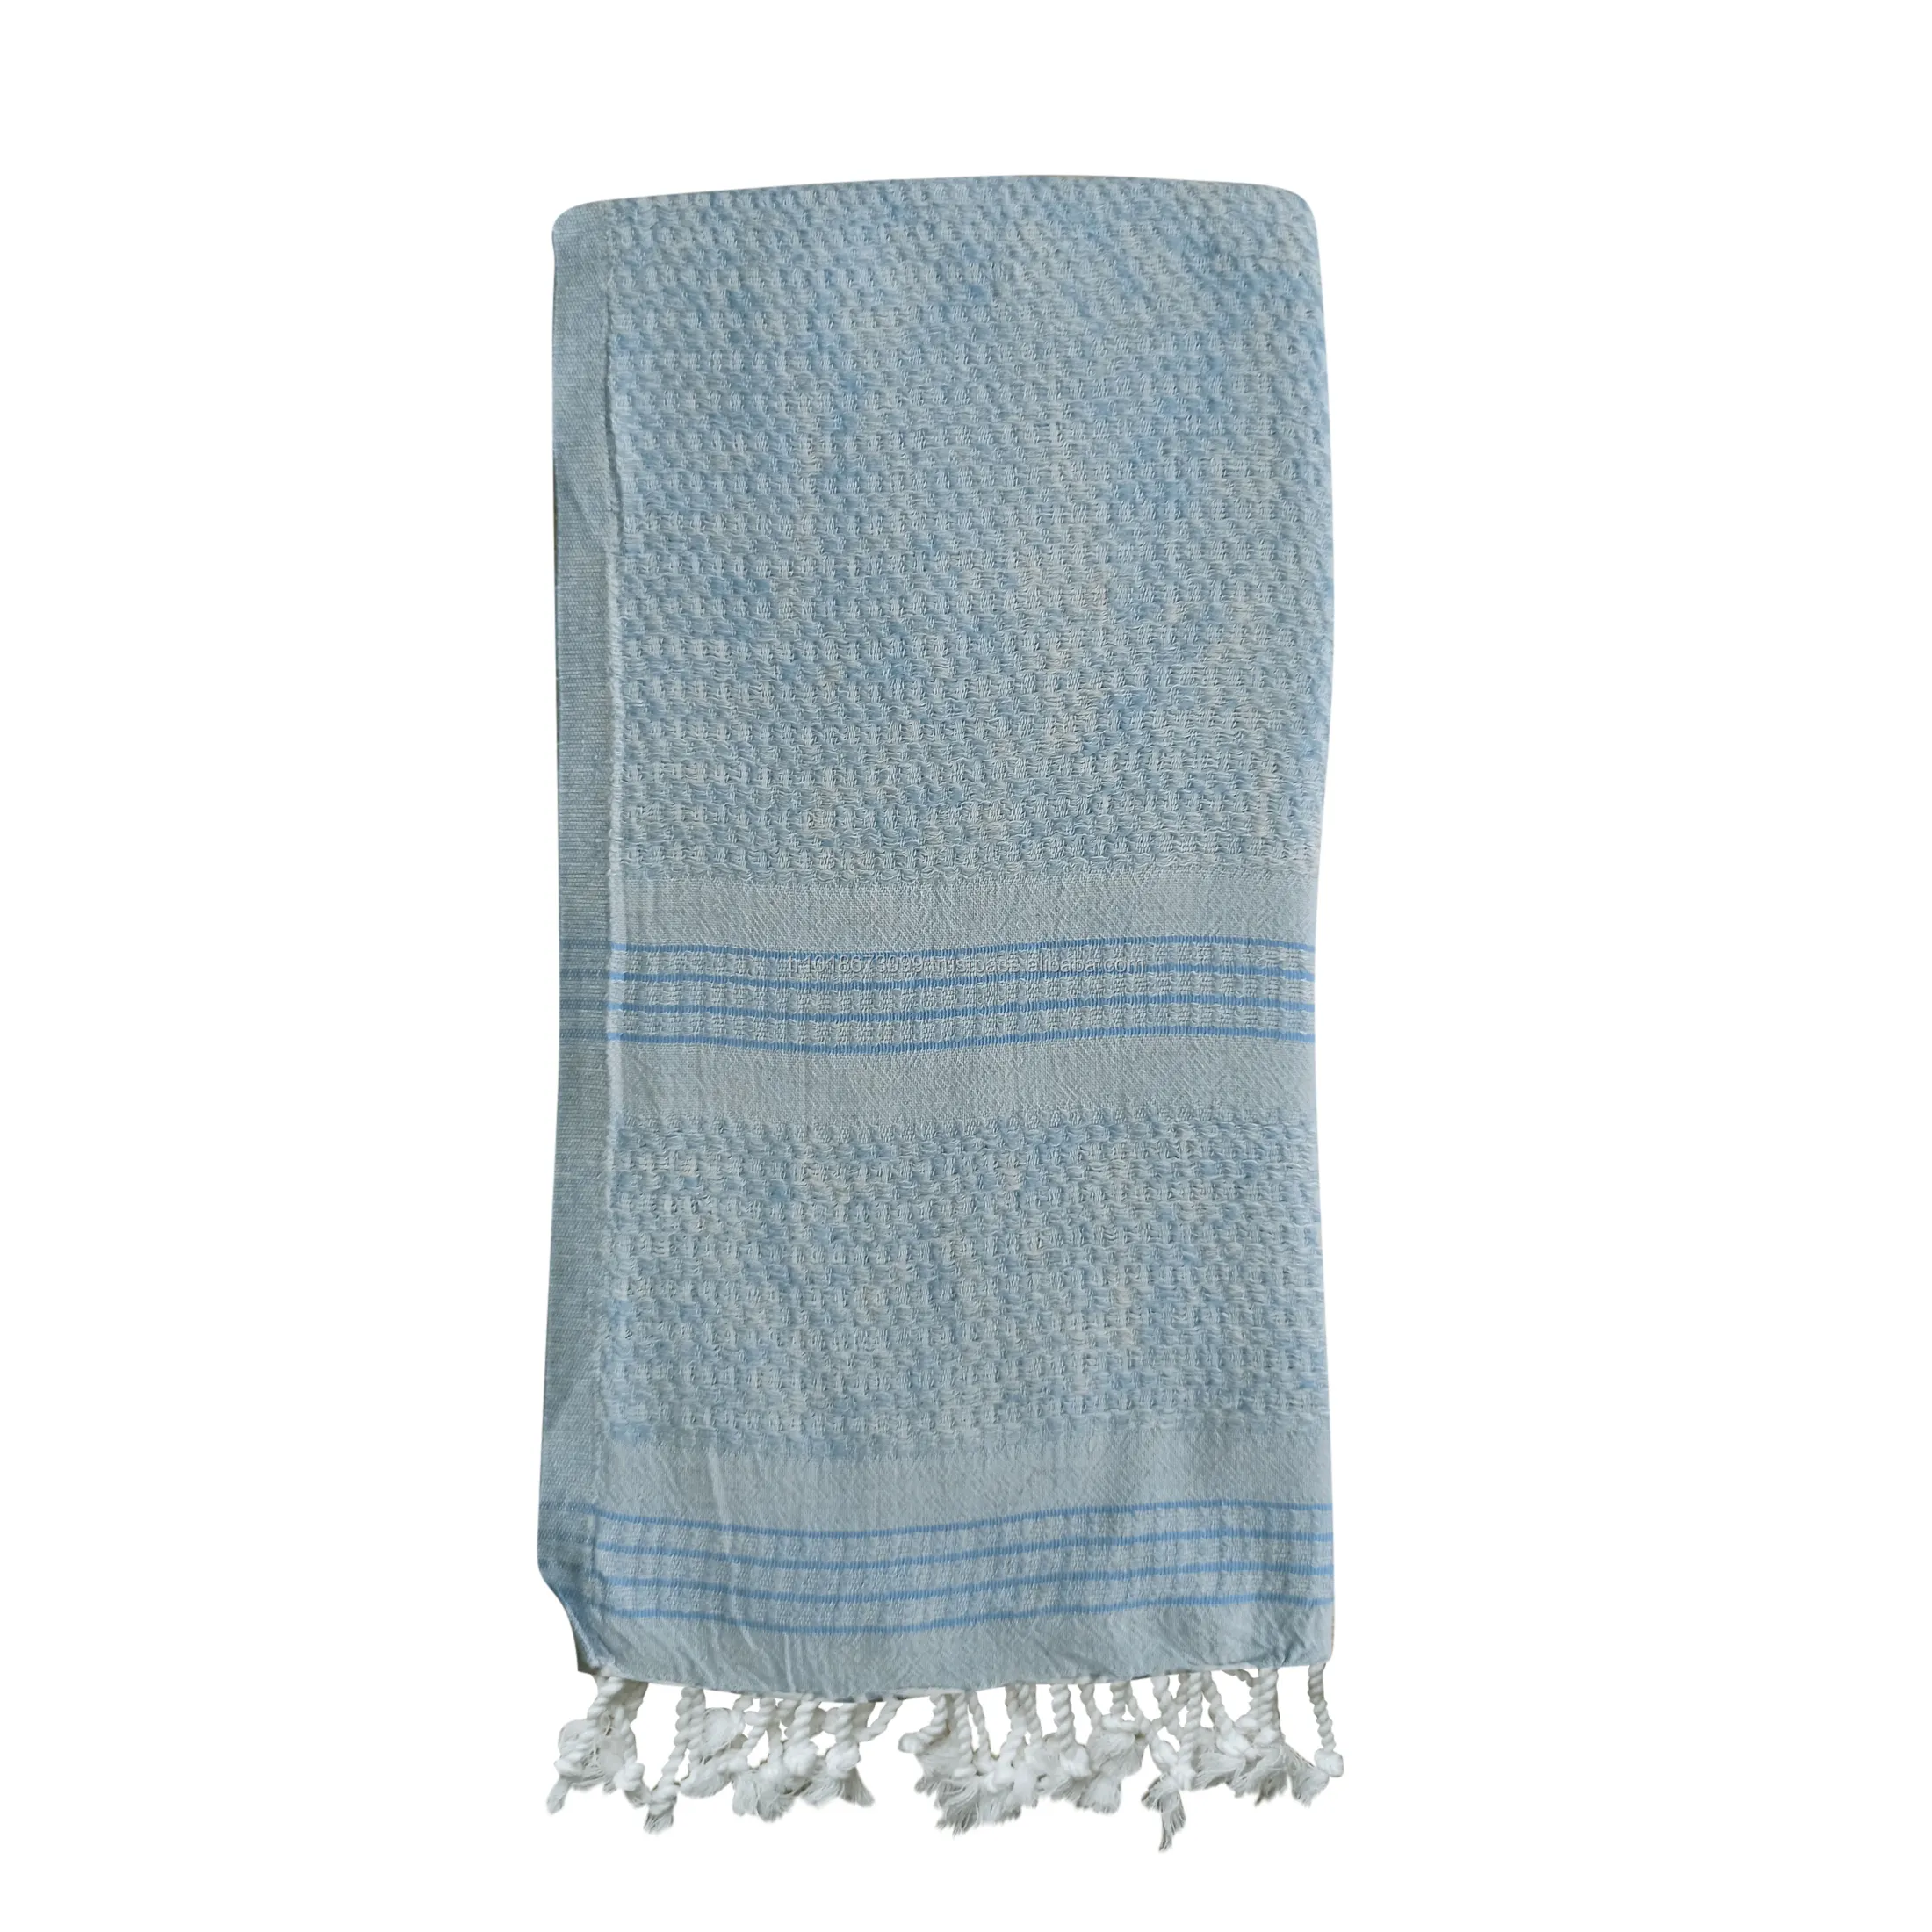 Linen Cotton Beach Towels, 90x170cm 35x66" made in Turkey Fair-trade hammam peshtemal fouta - Turquoise Linen Collection